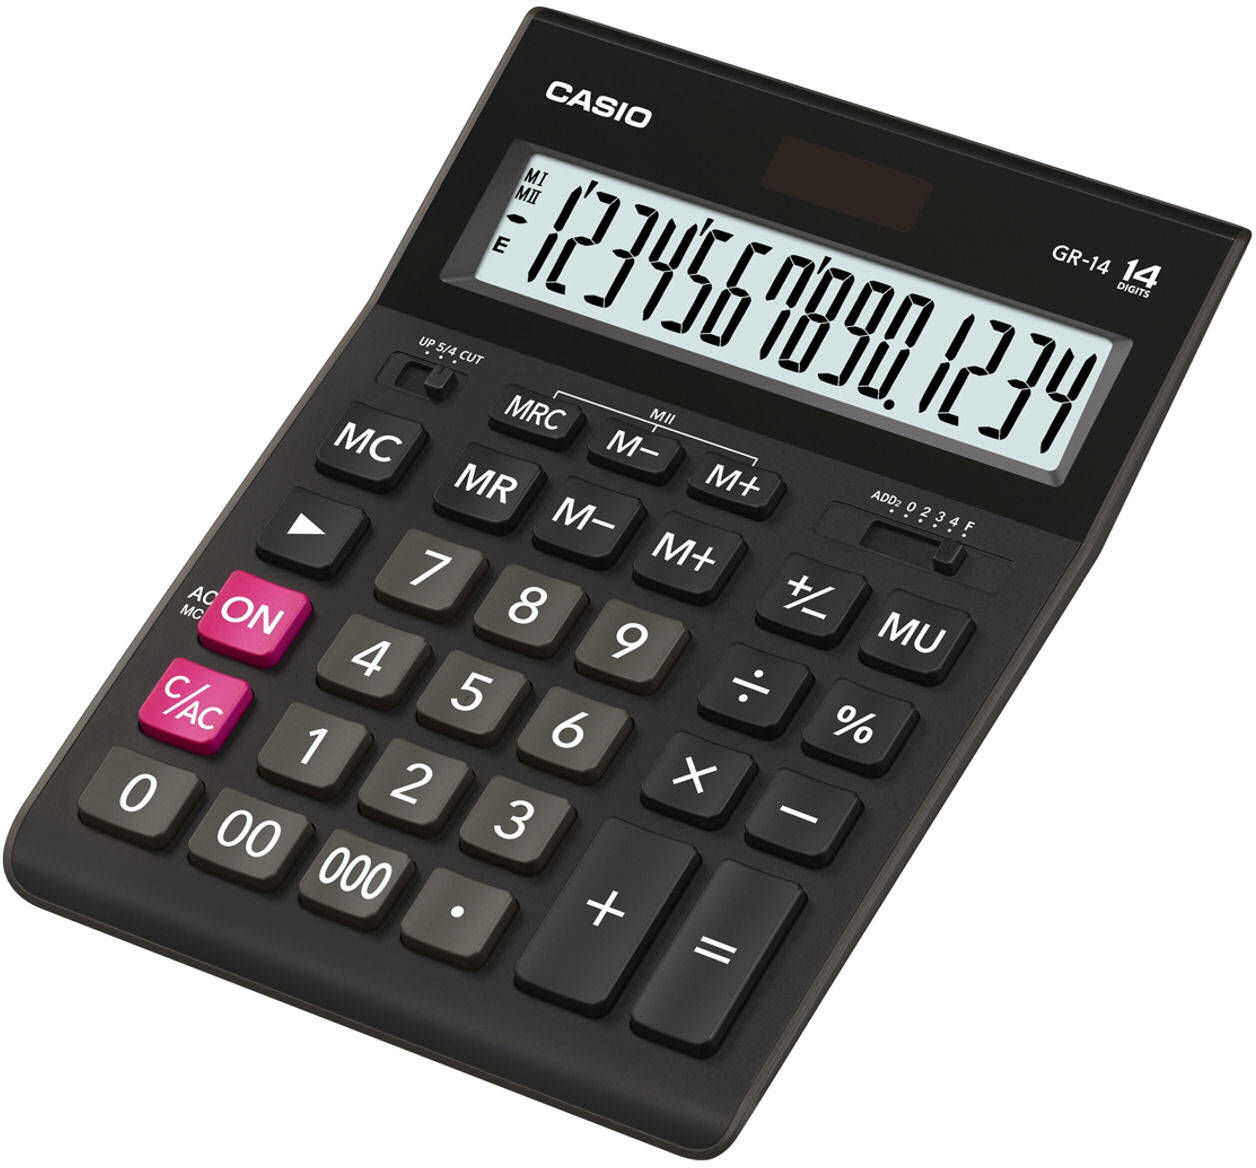 Casio Kalkulator GR-14 biurkowy